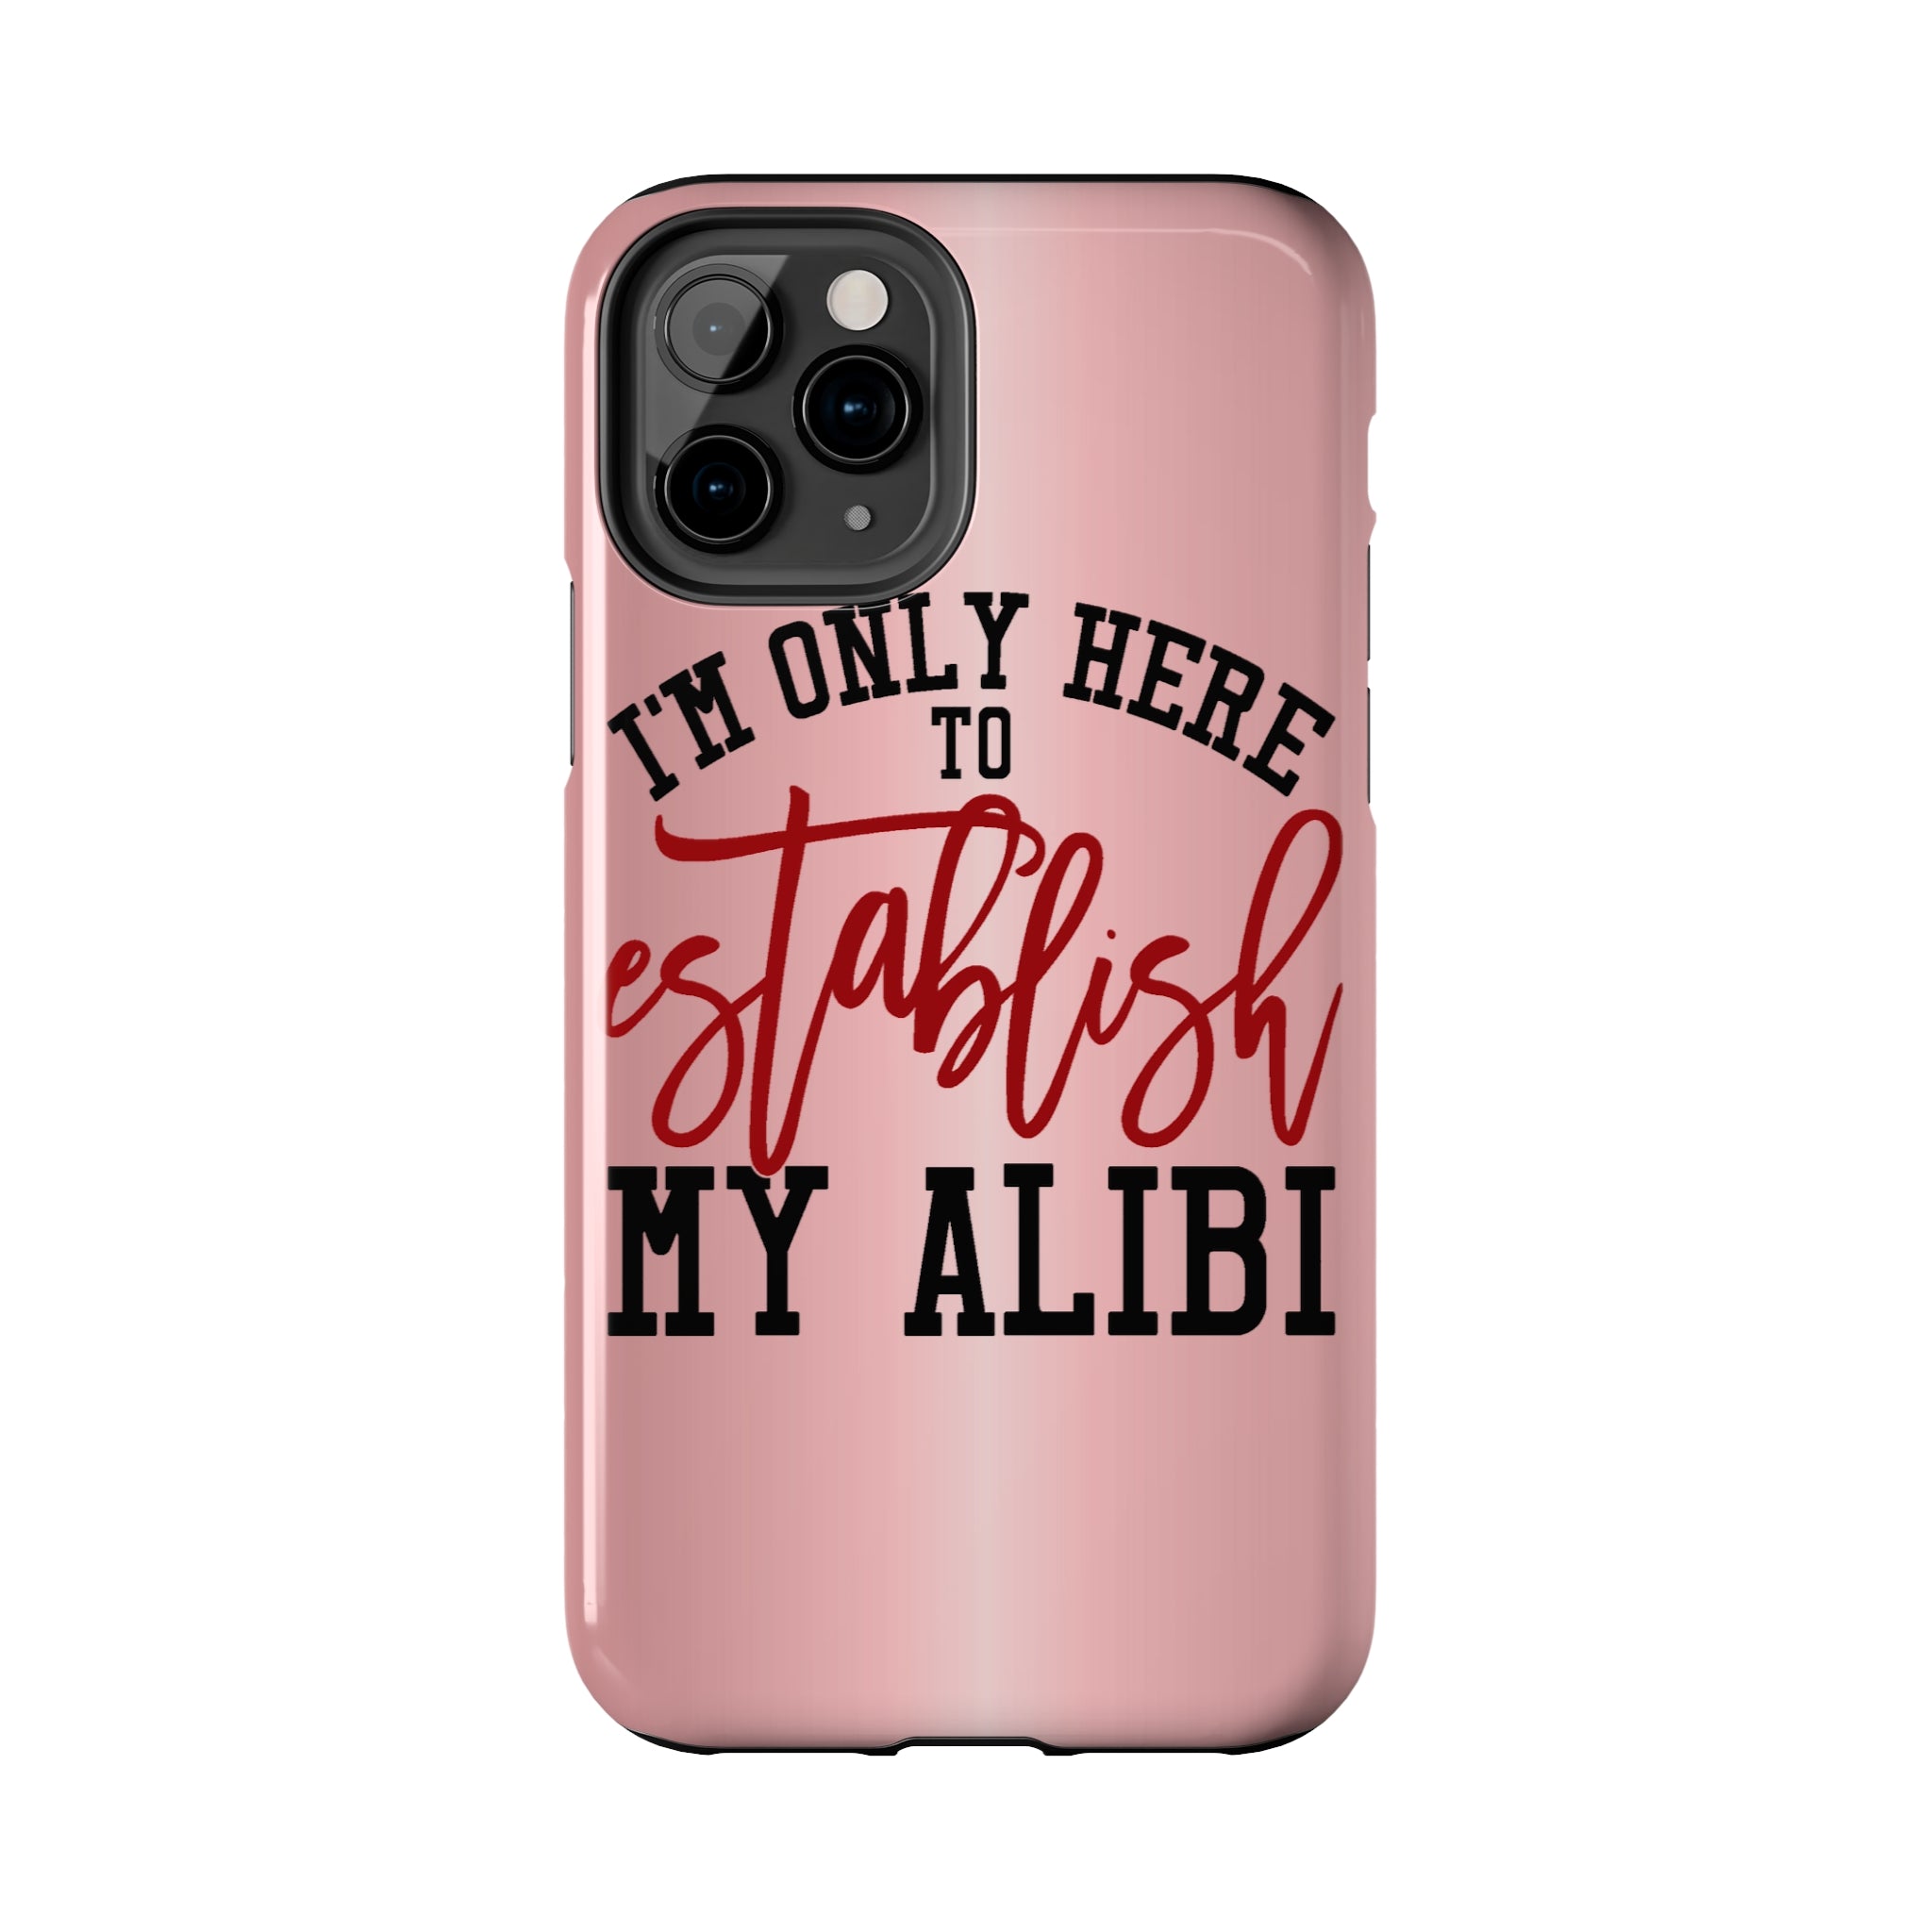 Alibi Tough Phone Case